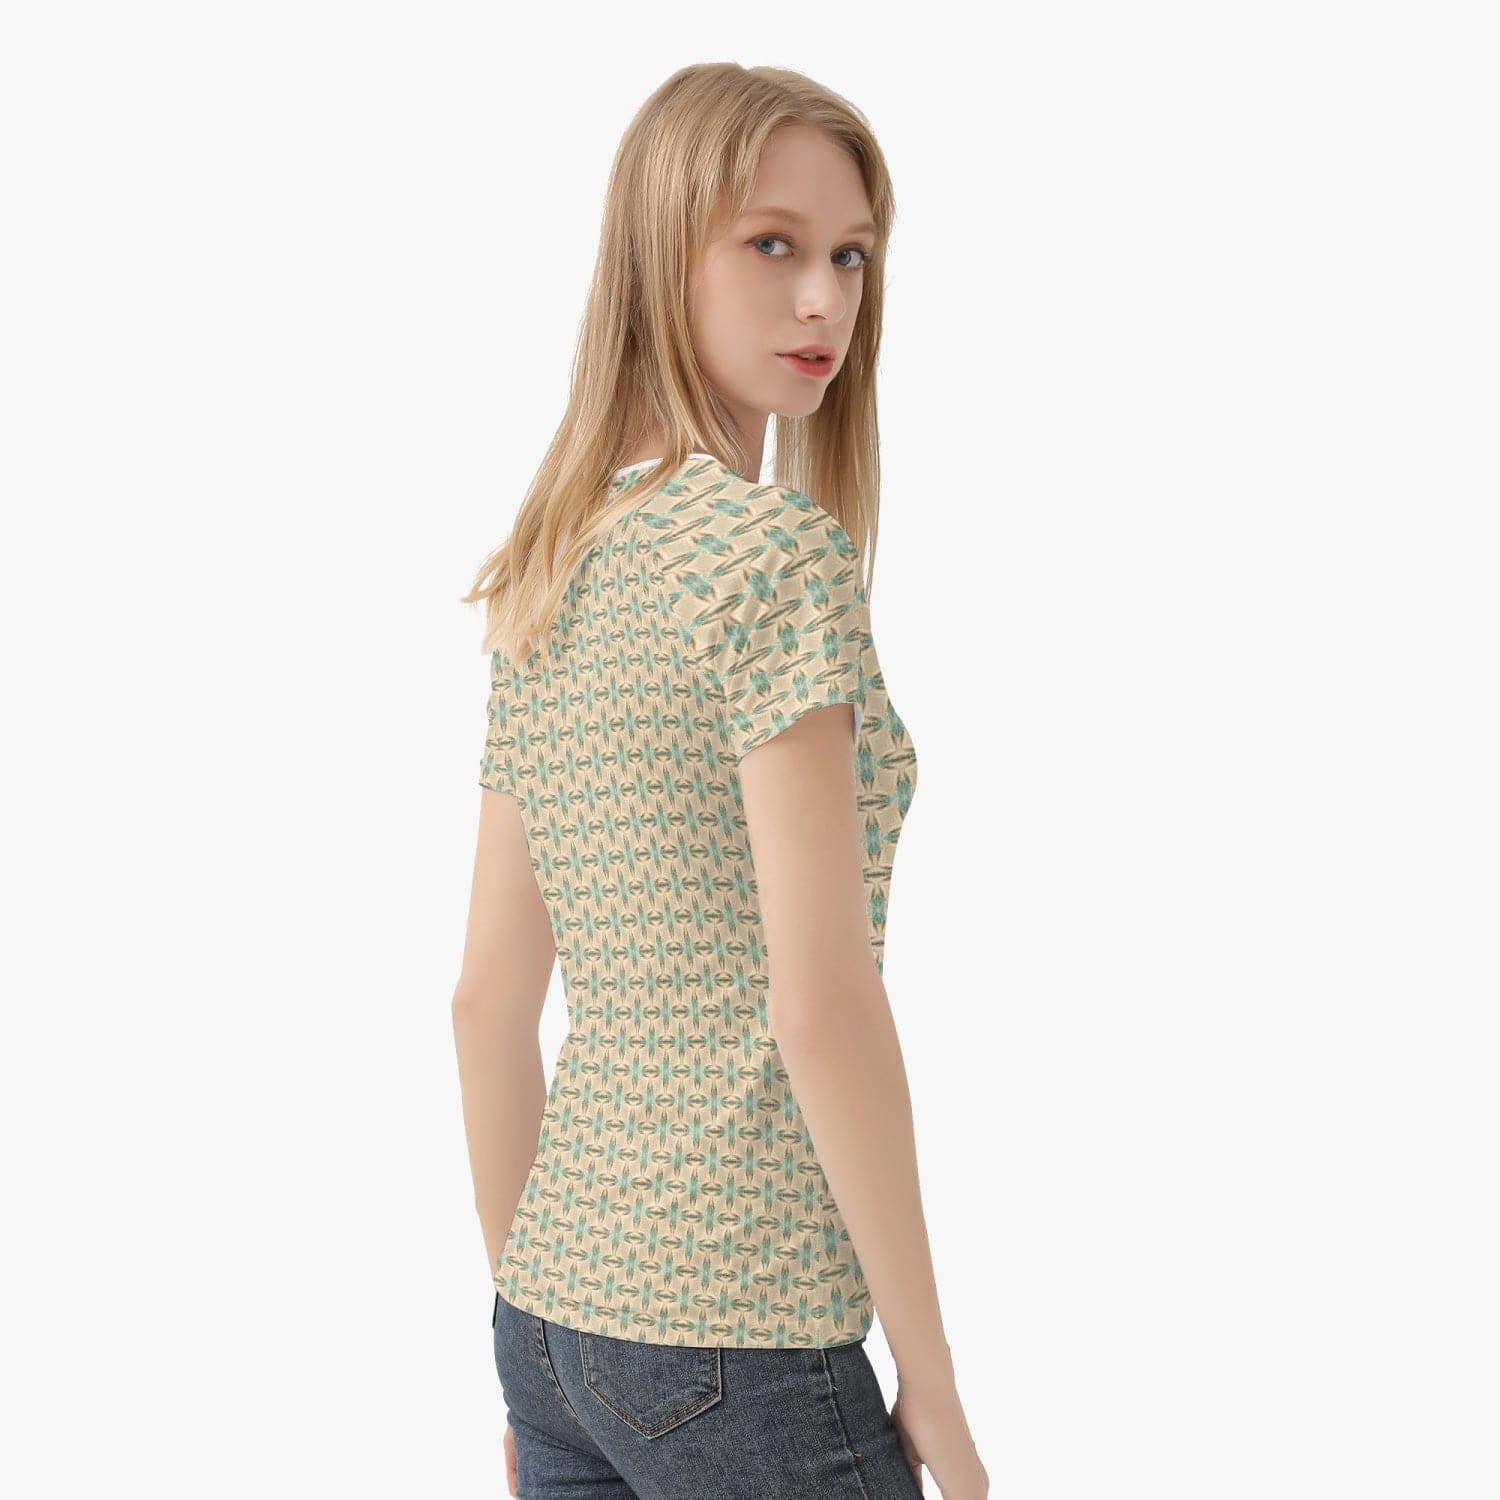 Sand and Aqua blue fine patterned Handmade Quick dry Women Yoga Top/T-shirt, by Sensus Studio Design